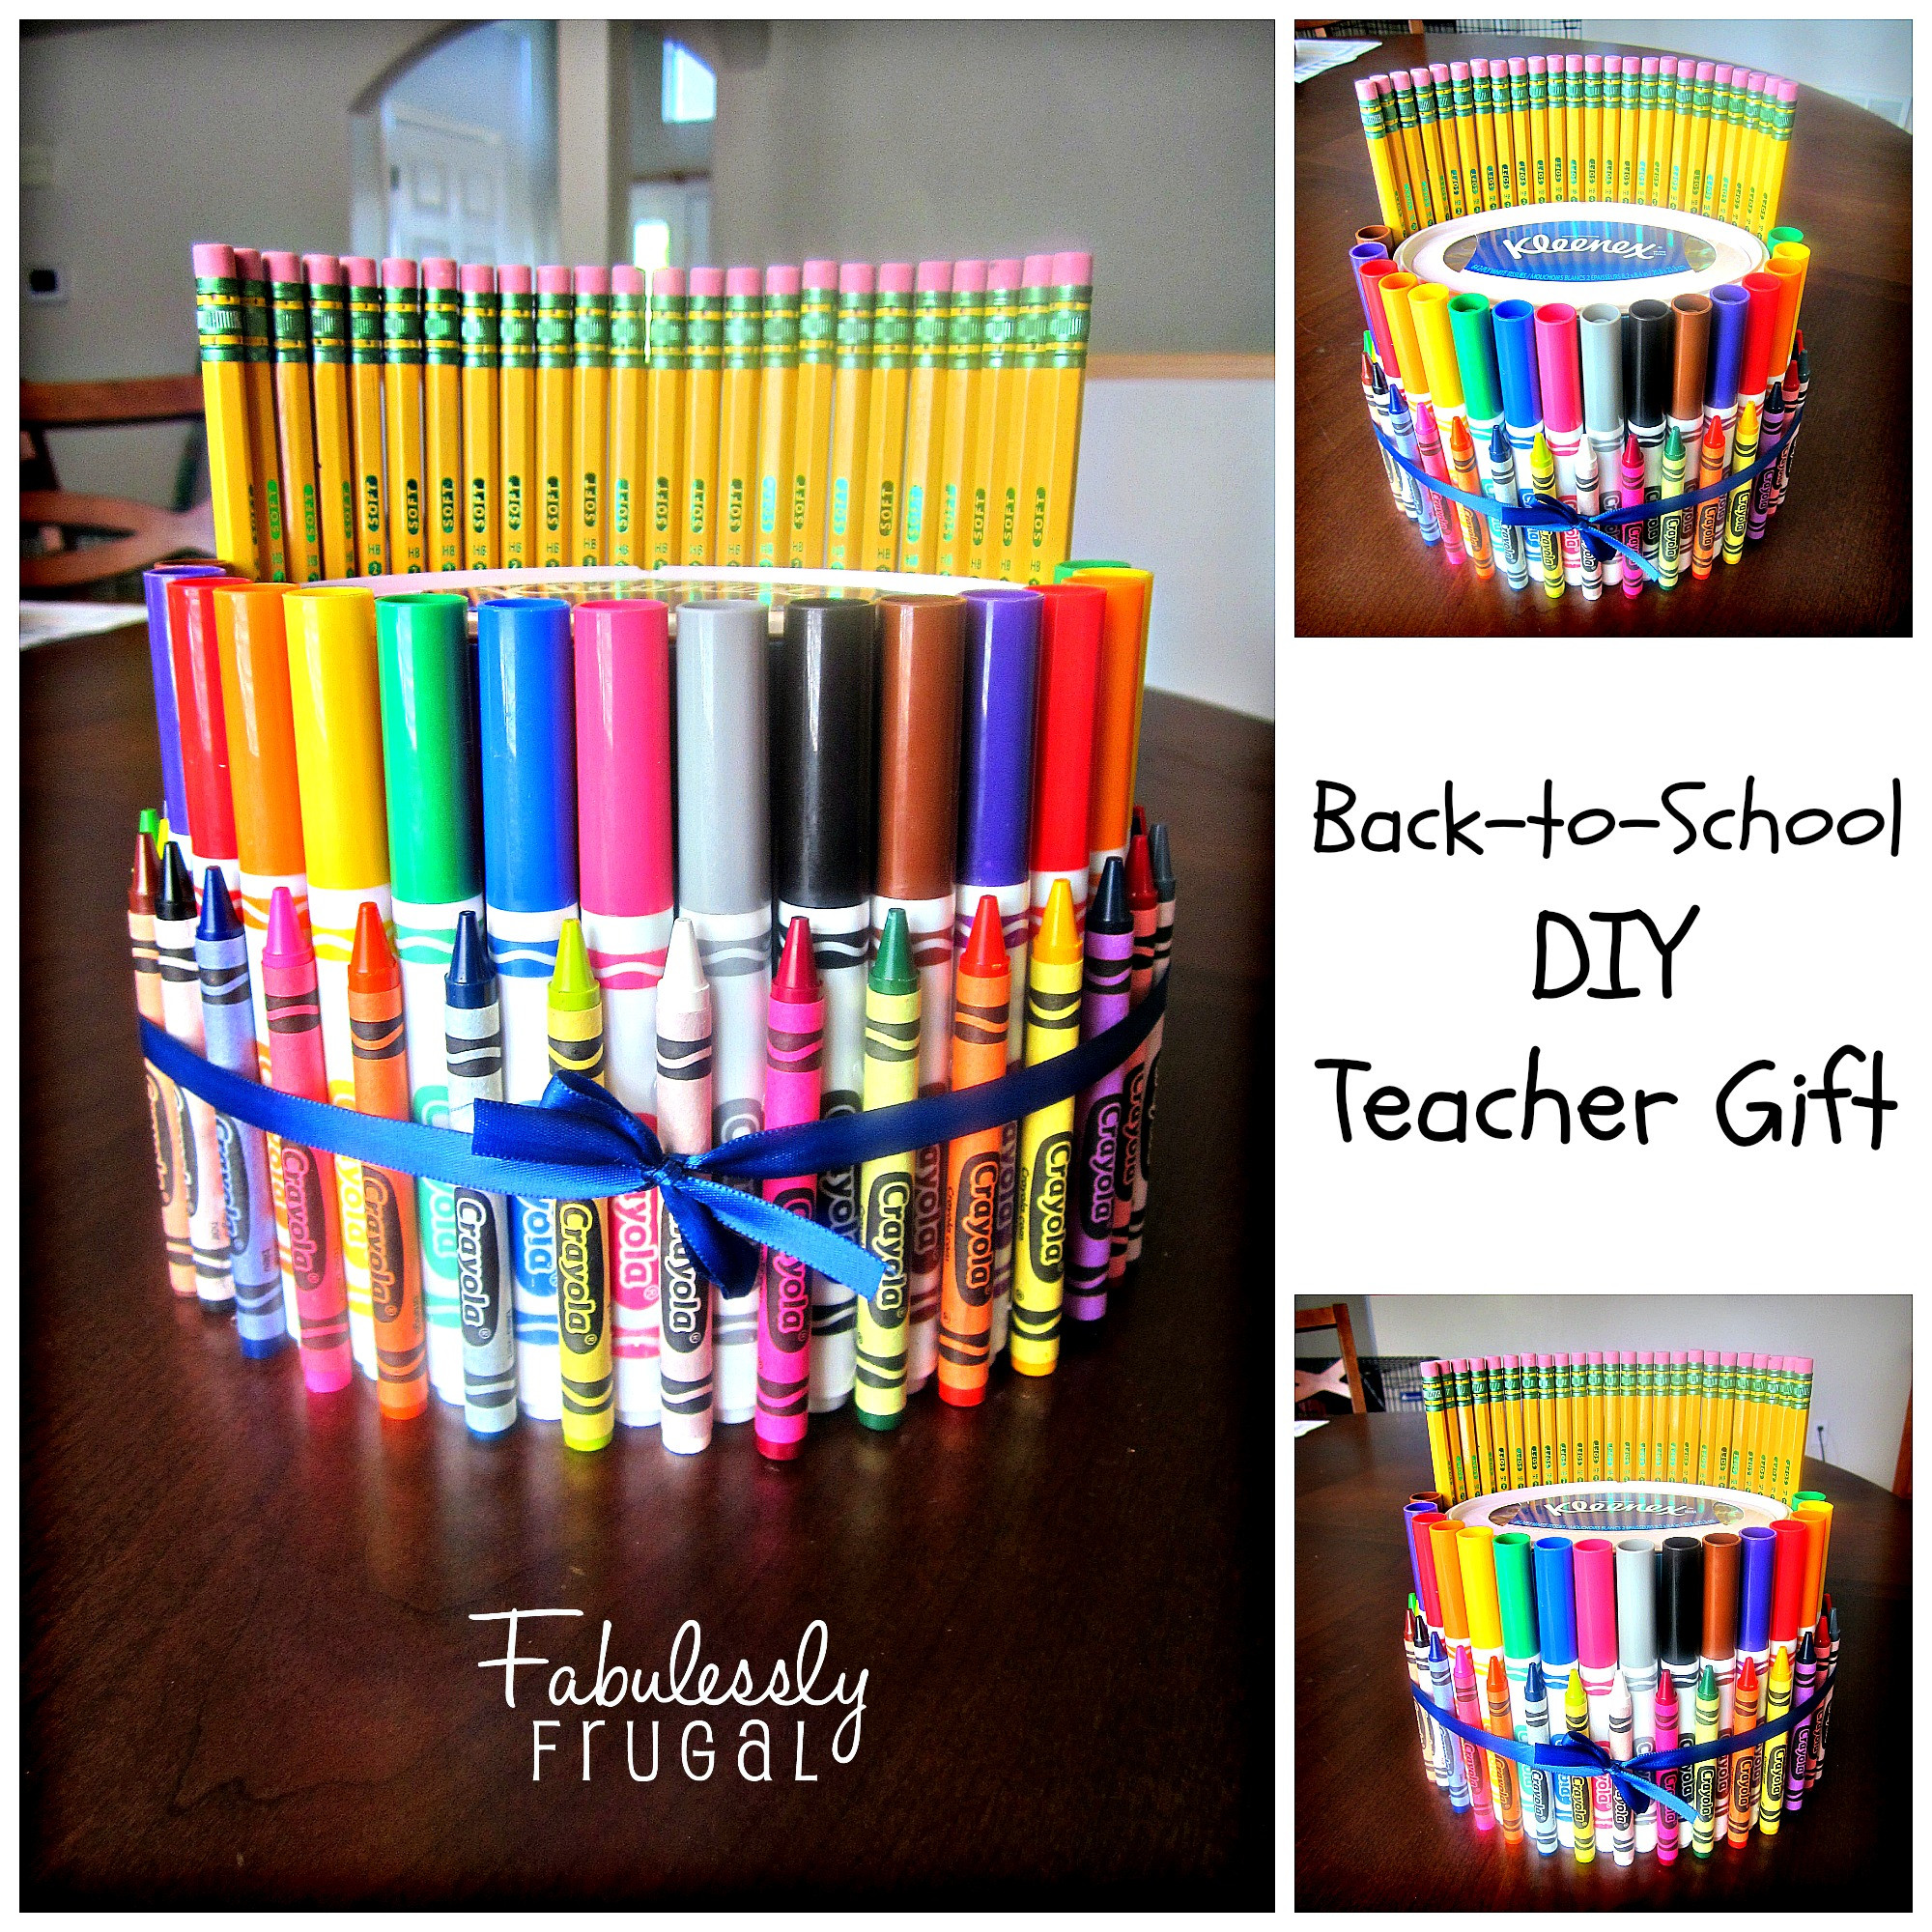 DIY Teacher Gifts
 DIY Teacher Gift for Back to School